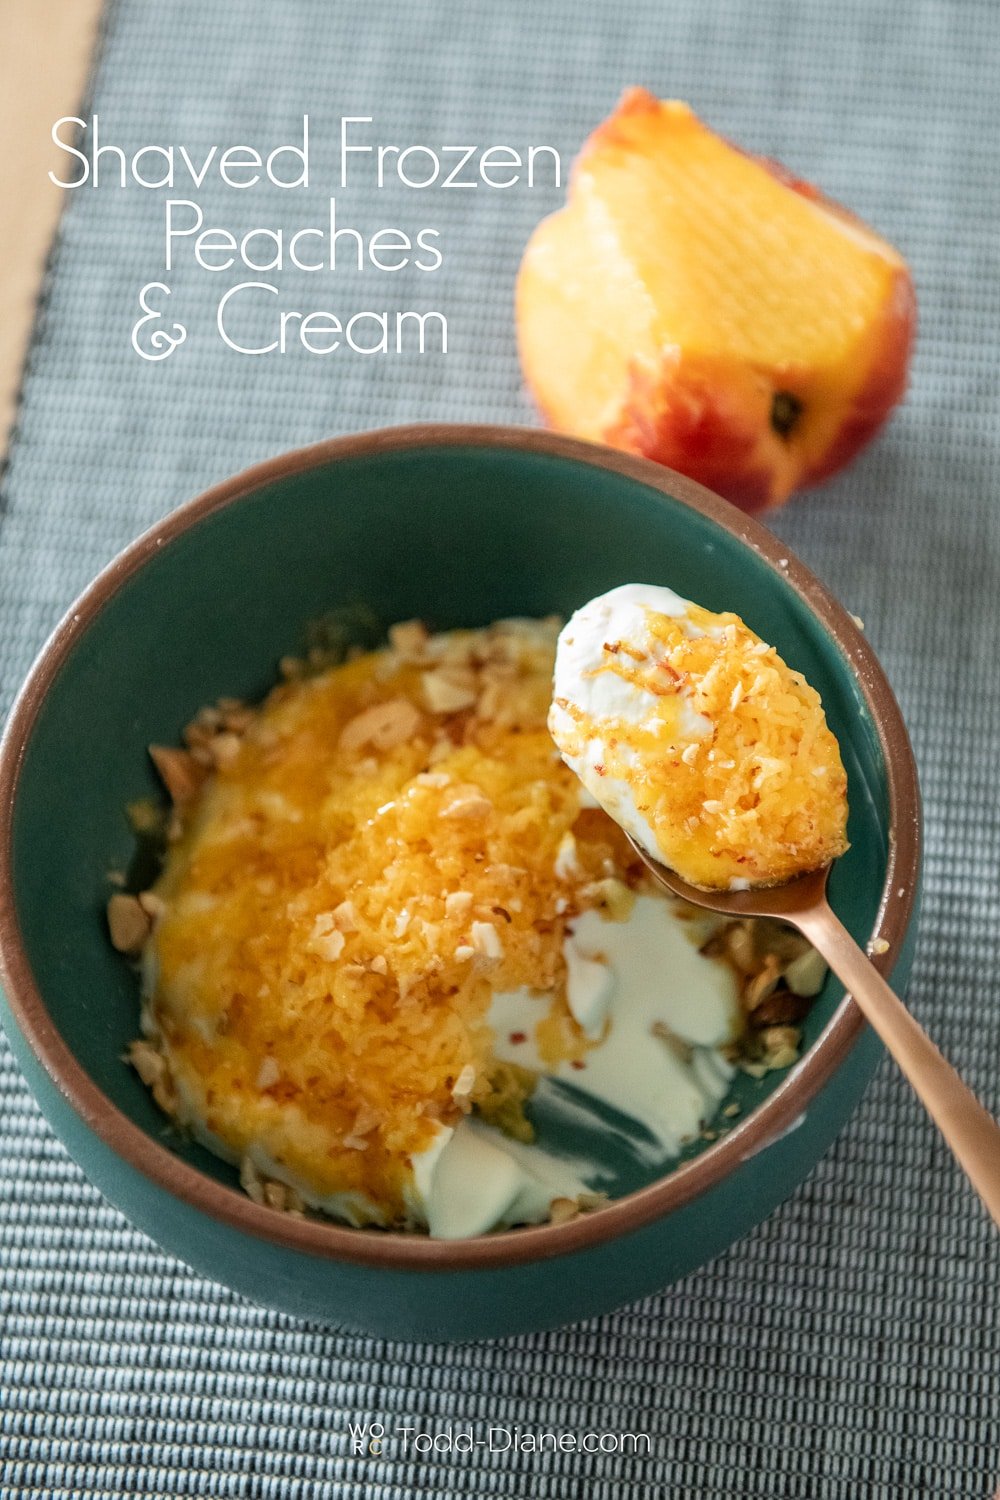 https://whiteonricecouple.com/recipe/images/Frozen-Peaches-and-Cream-WhiteOnRiceCouple-2.jpg